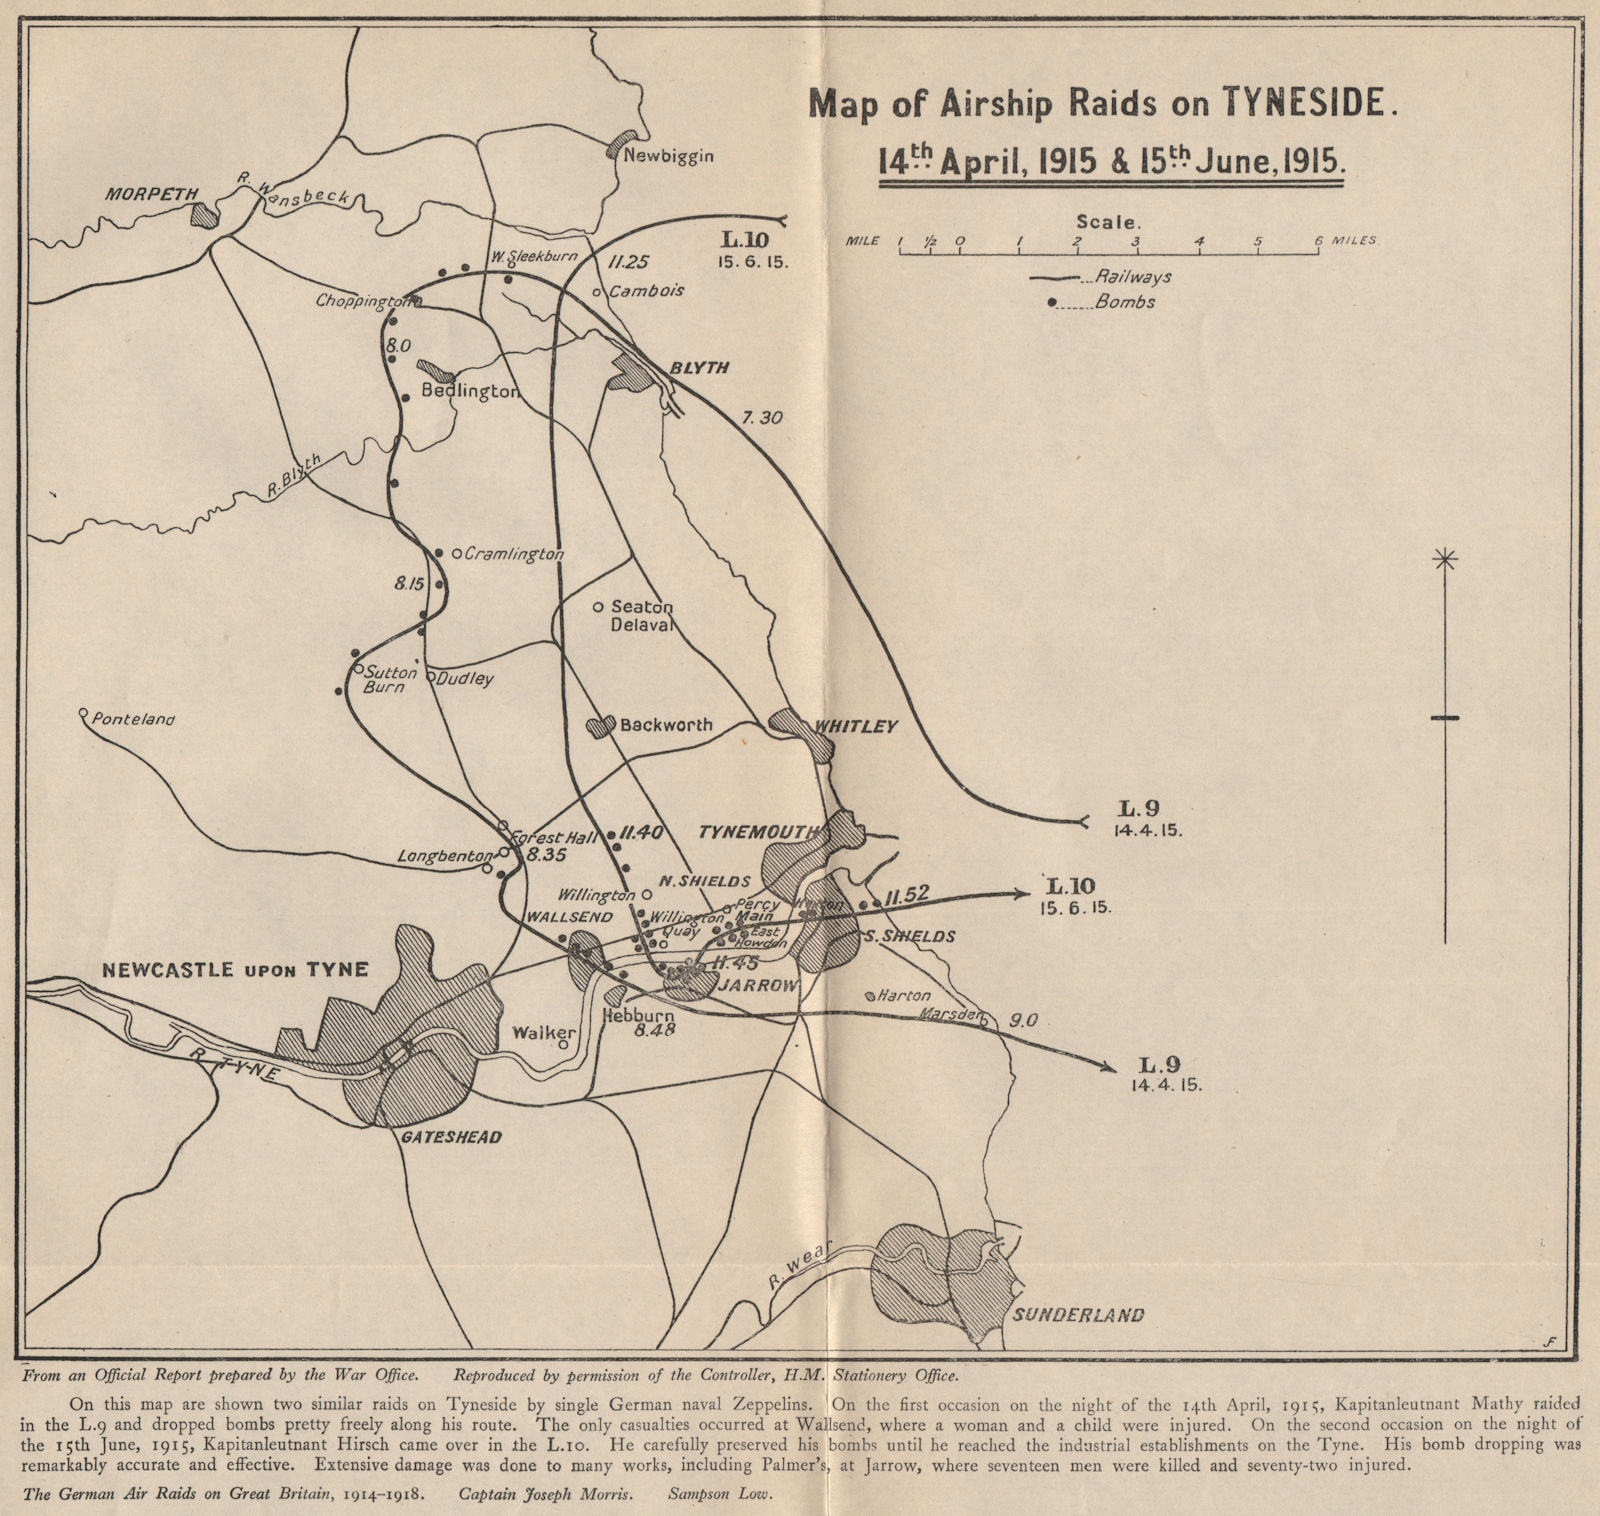 TYNESIDE ZEPPELIN L9 L10 AIRSHIP RAIDS April/June 1915. South Shields 1925 map